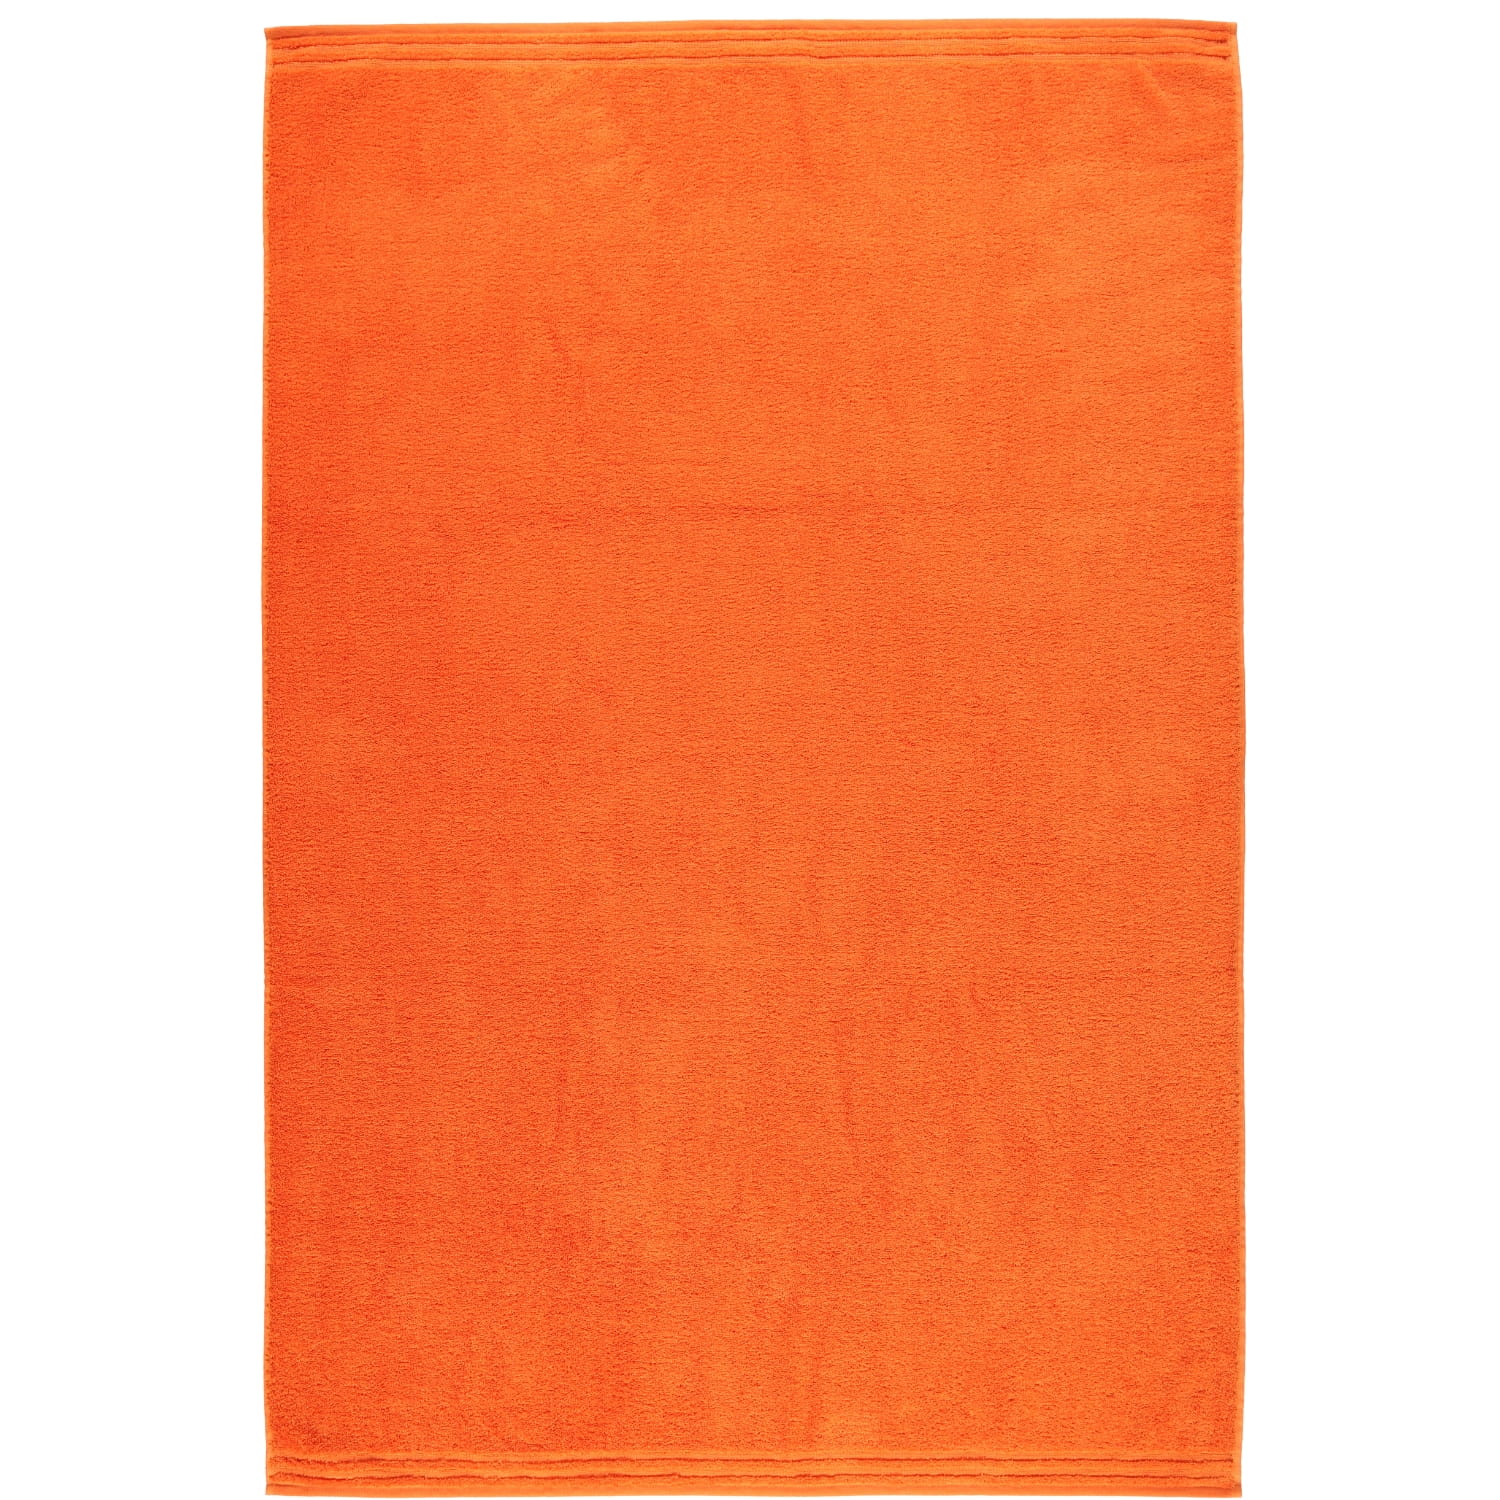 Vossen Calypso Feeling Vossen orange Vossen 255 | - - | Marken Handtücher | Farbe